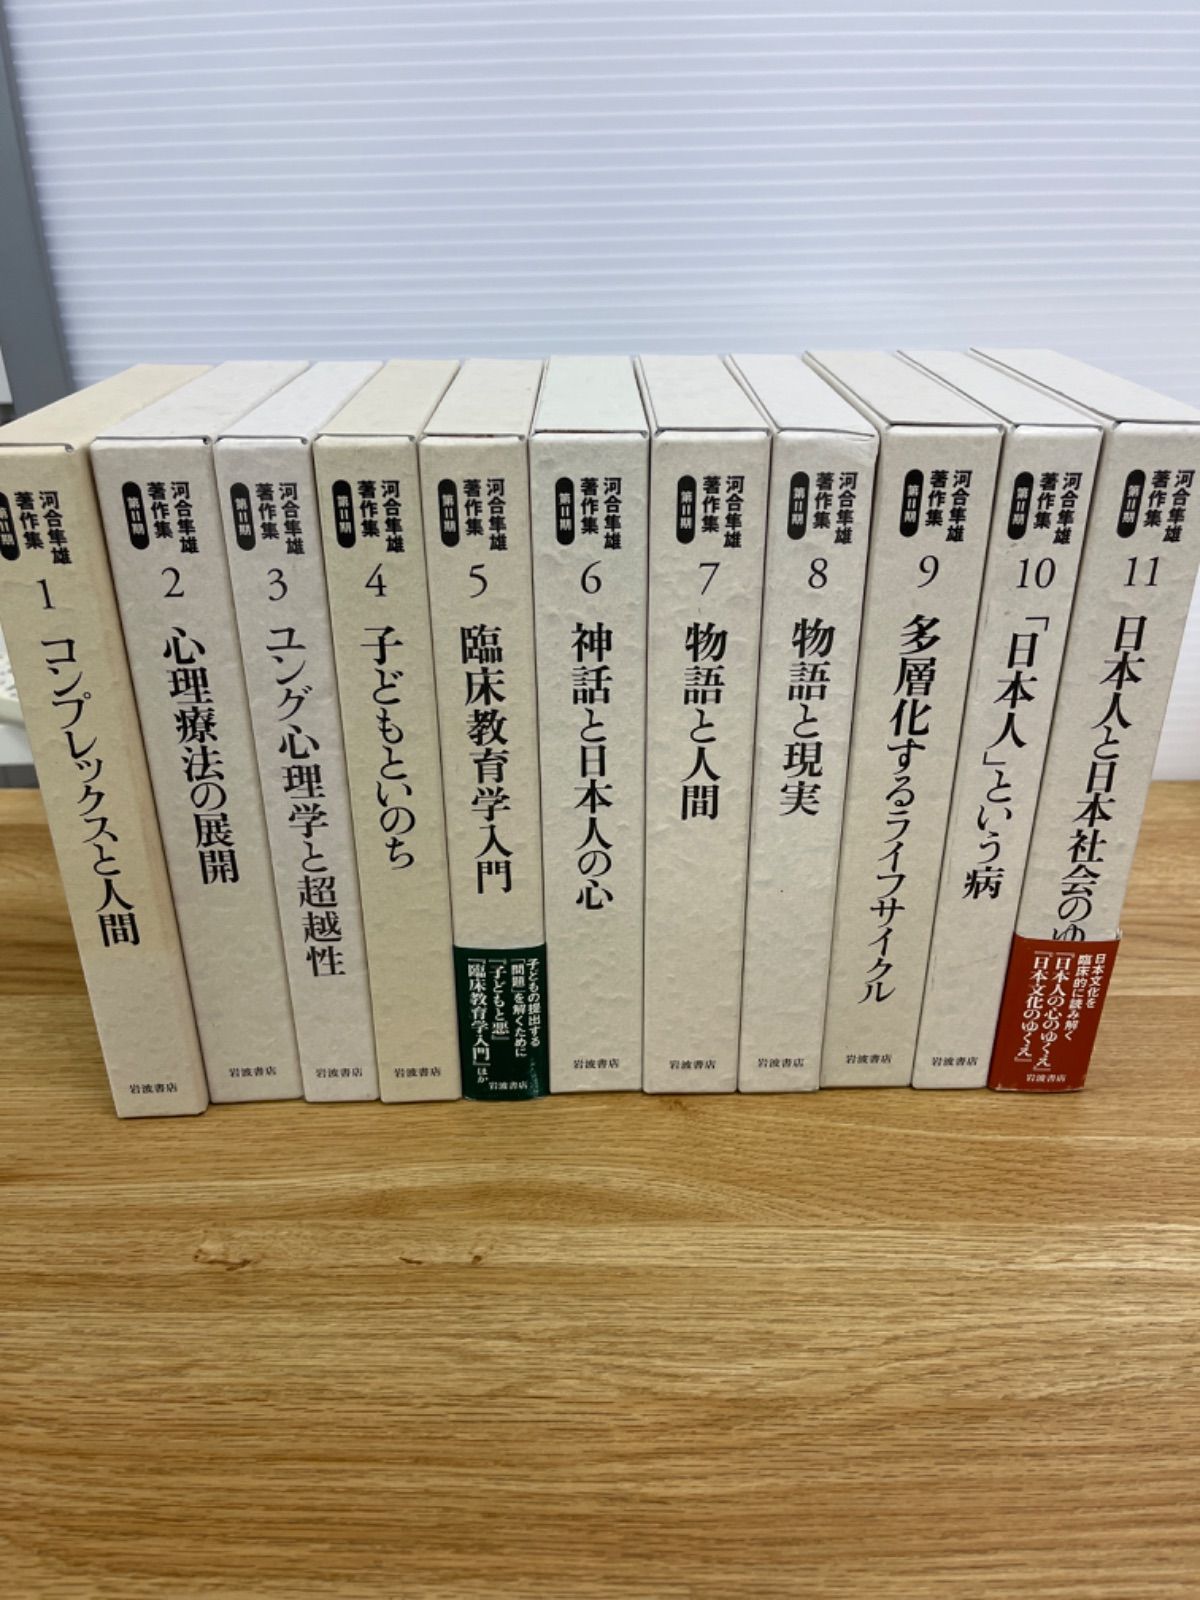 河合隼雄 著作集 第Ⅱ期 11巻セット 岩波書店 - メルカリ